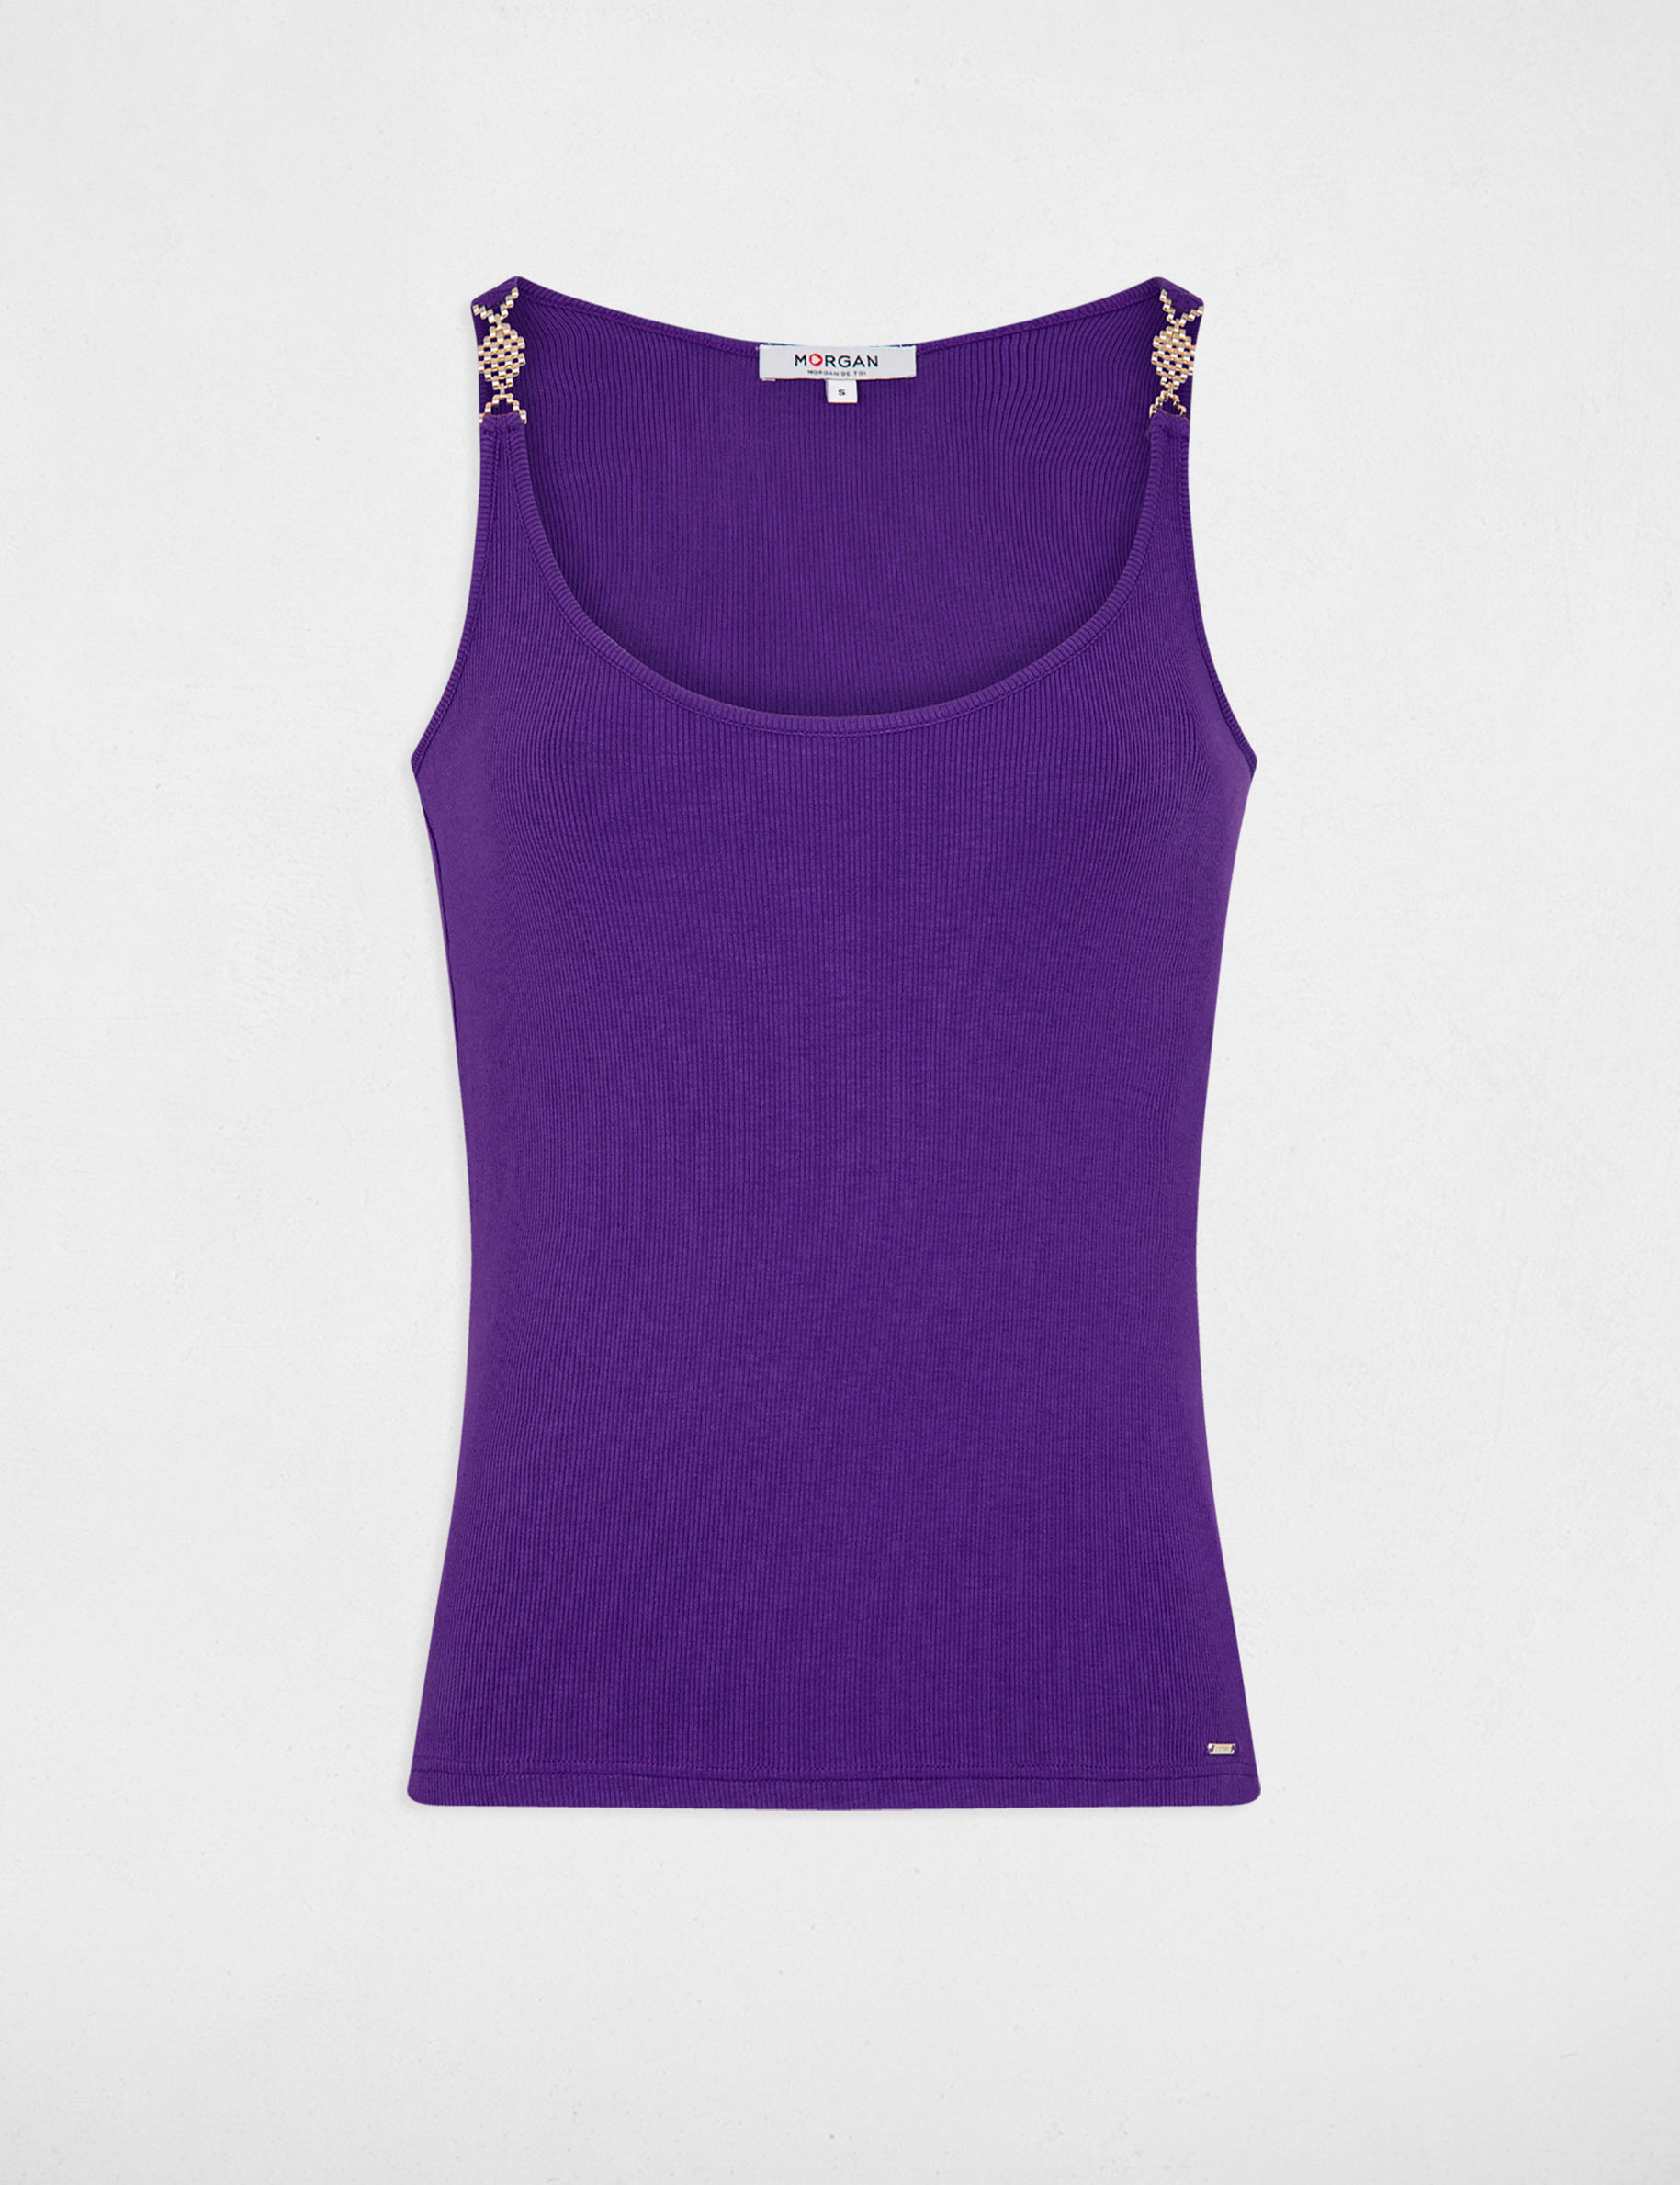 Vest top with thin straps purple ladies'